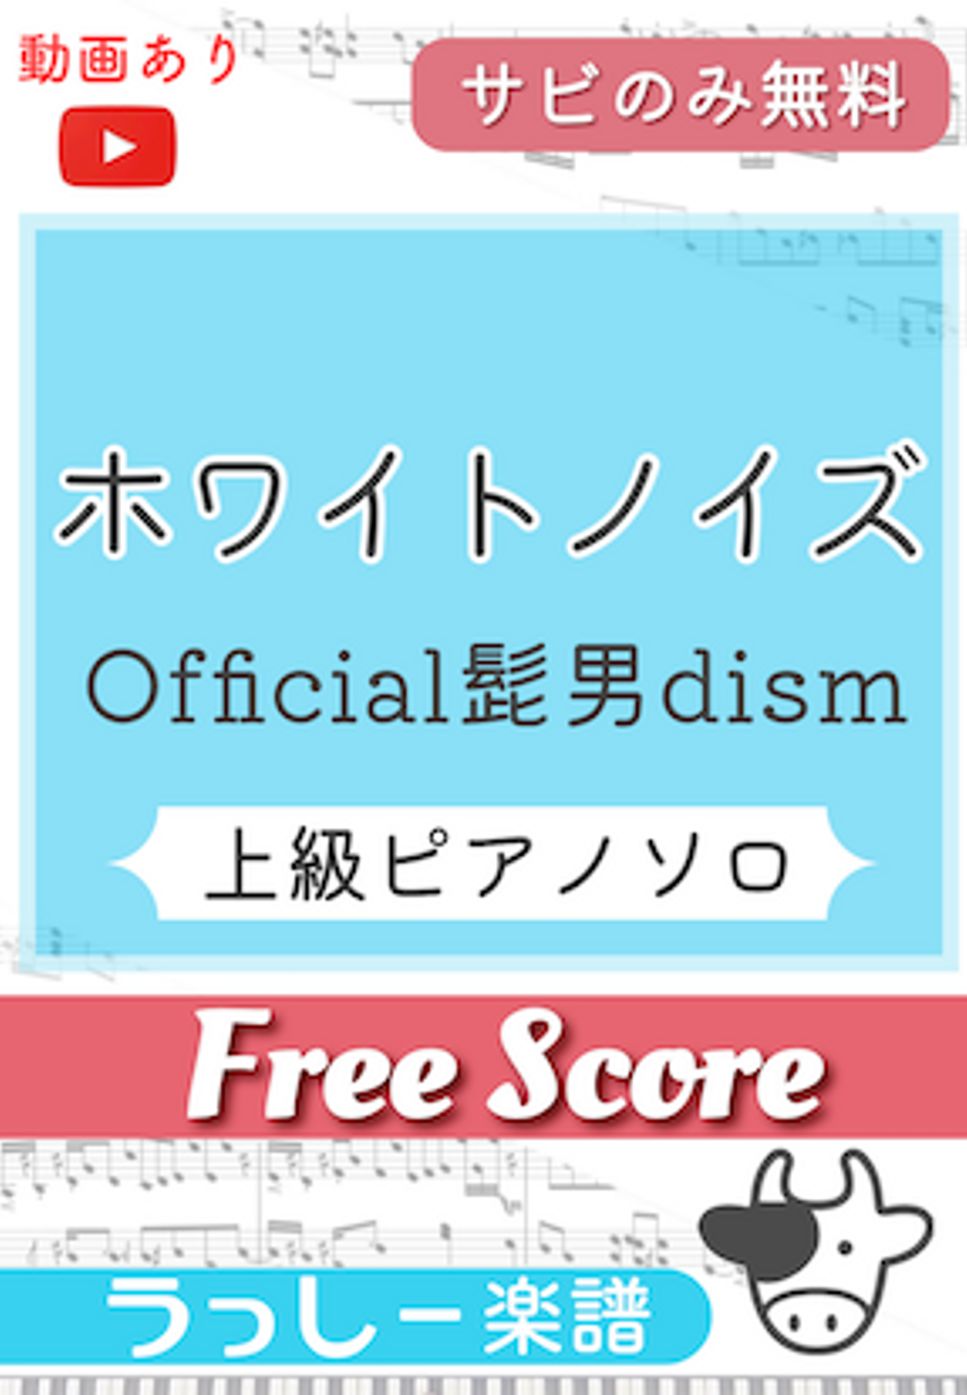 Official髭男dism - ホワイトノイズ (サビのみ無料) by 牛武奏人